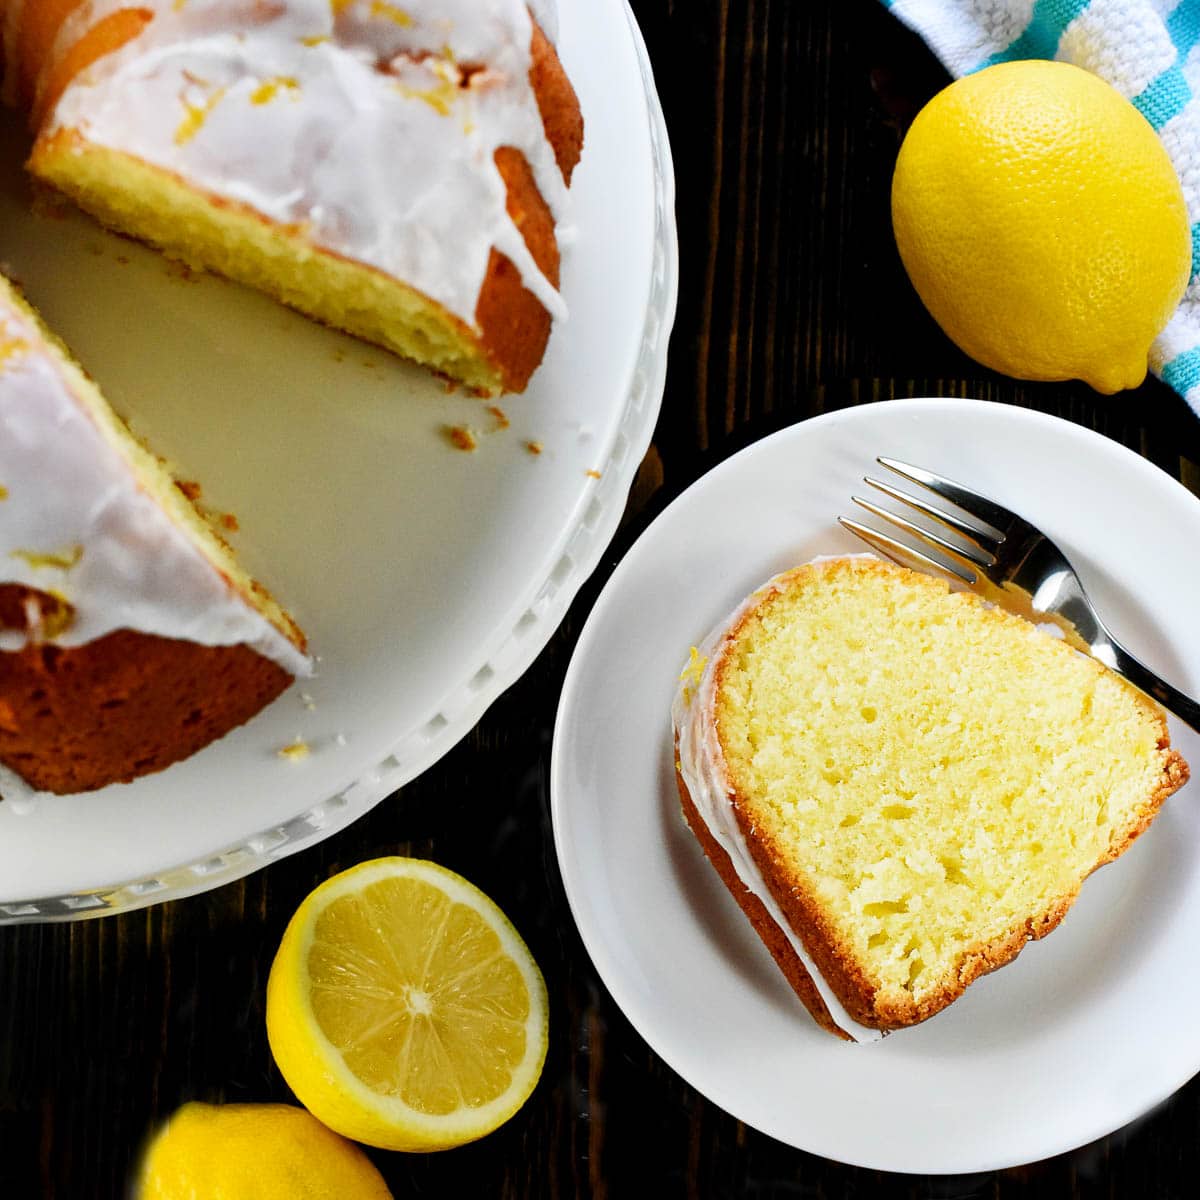 Lemon Pound Cake sliced on cake stand and on plate.